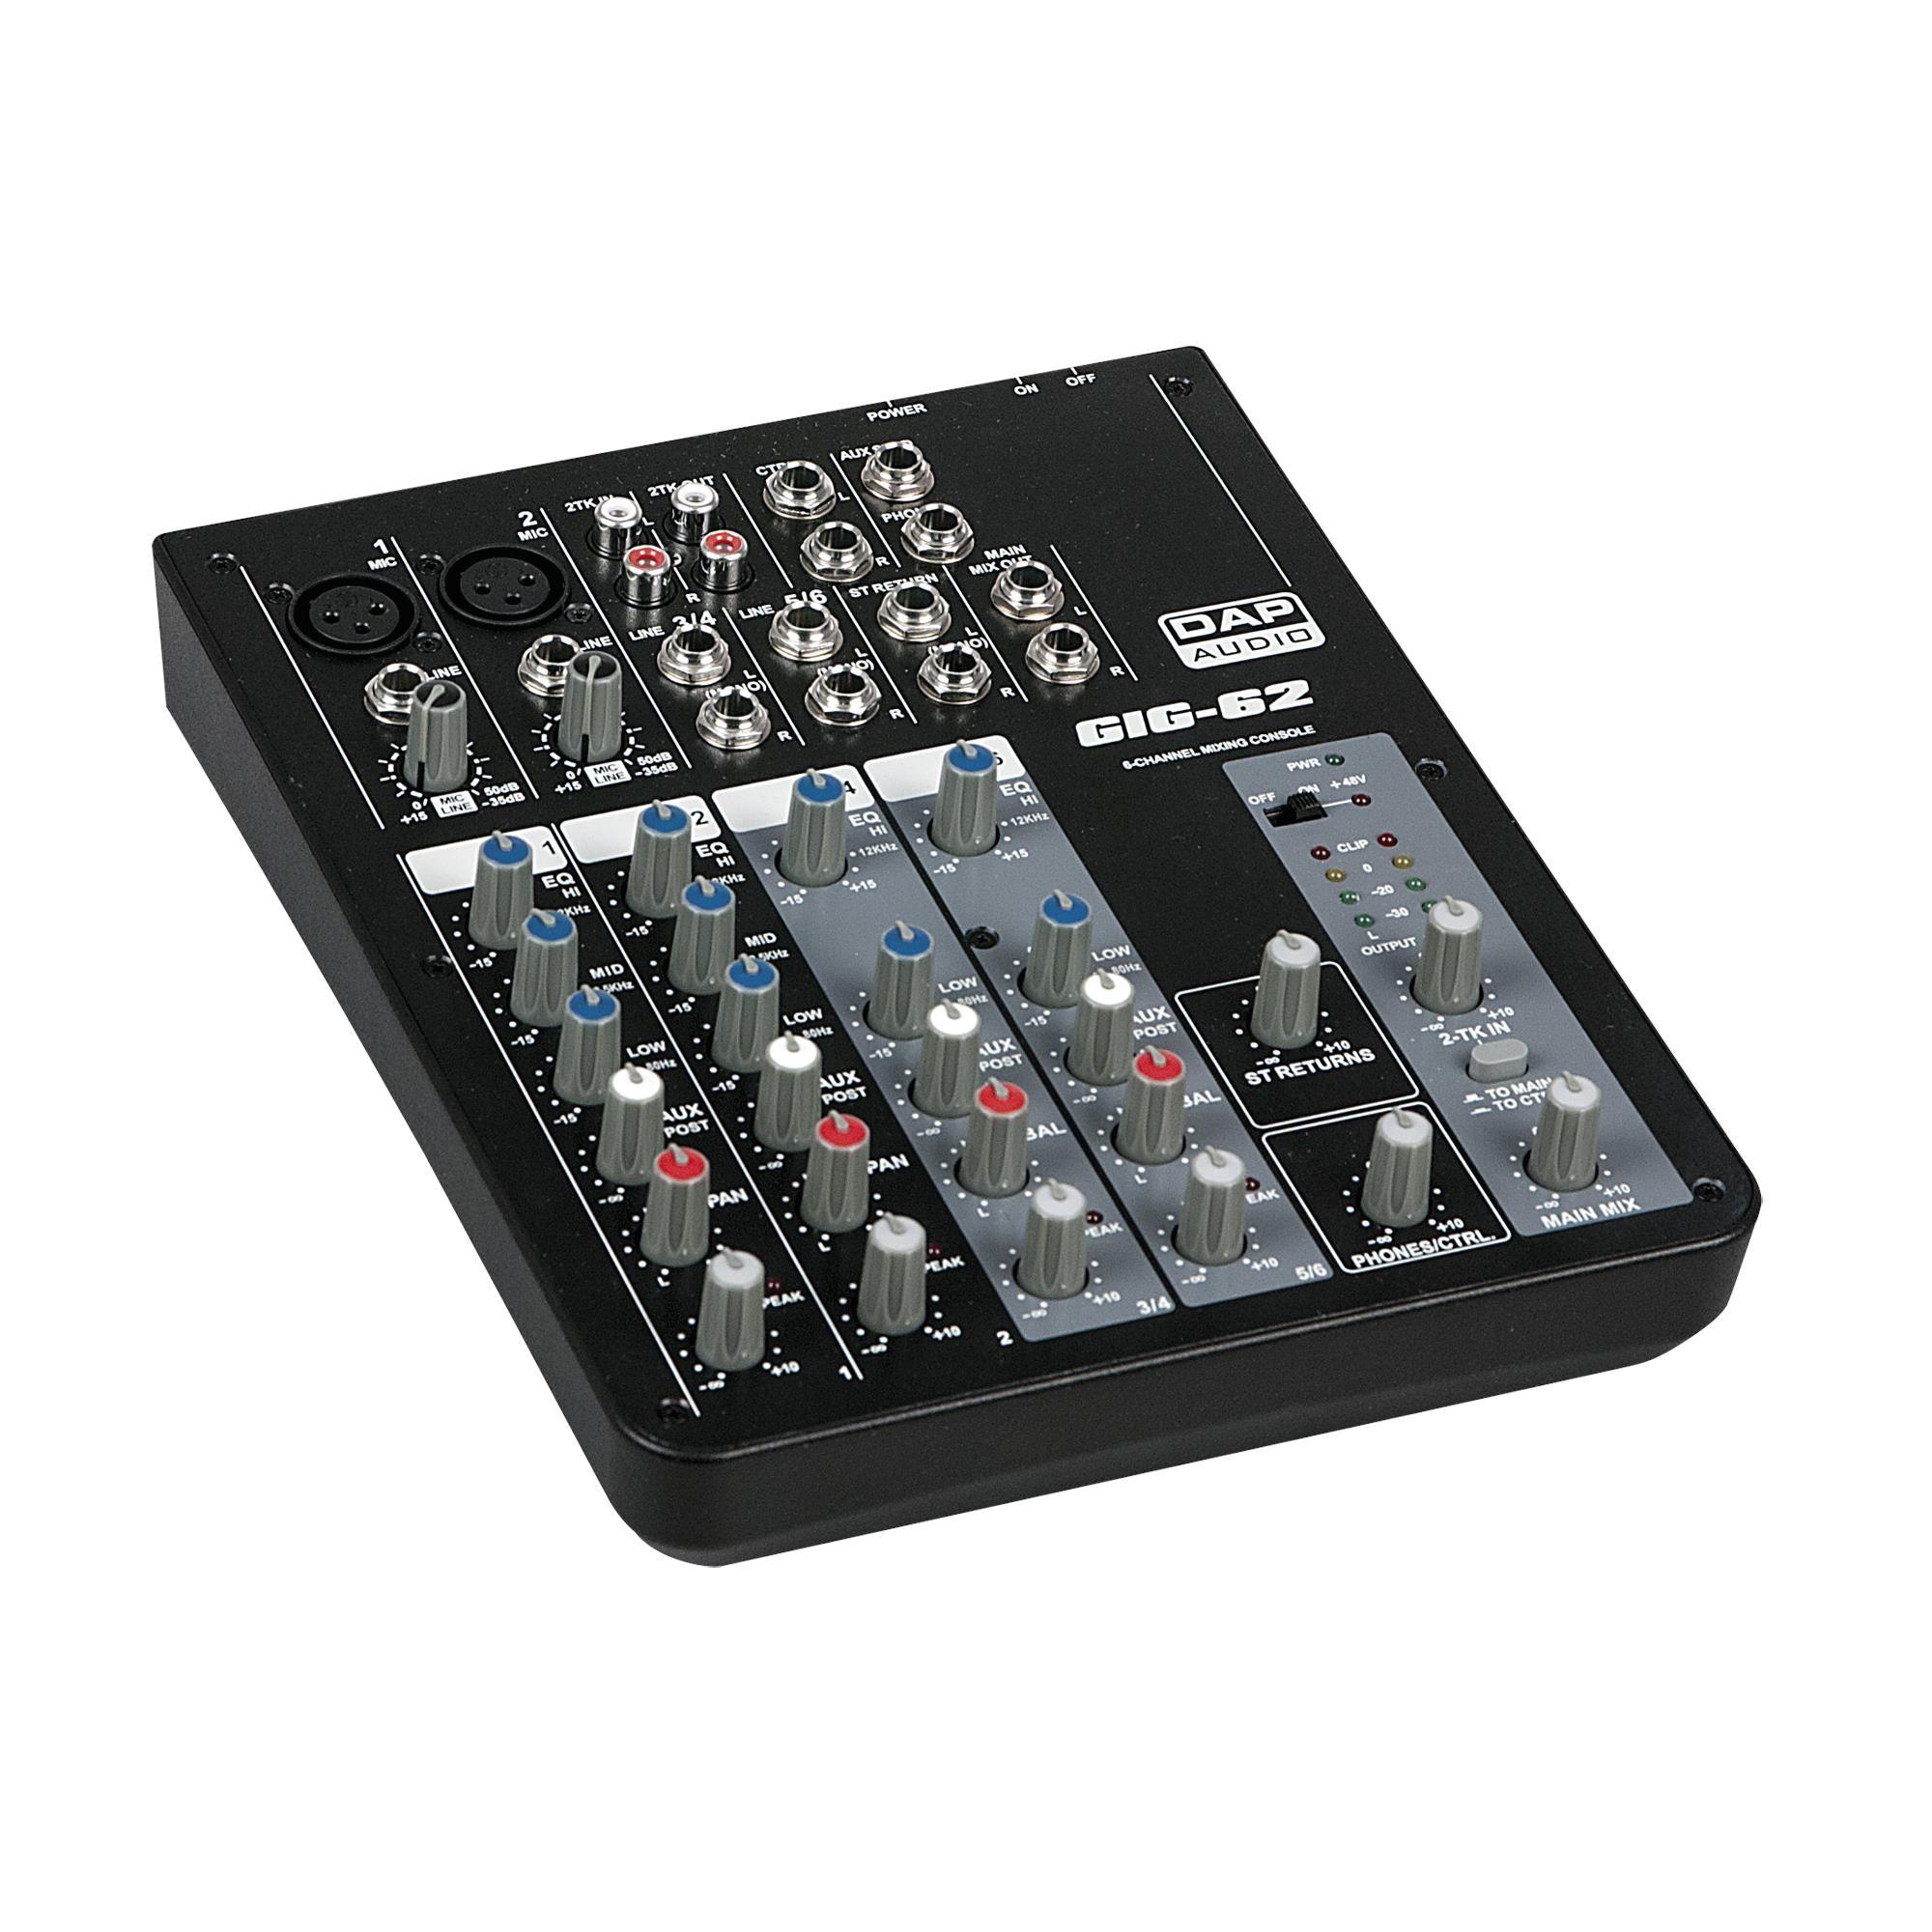 DAP GIG-62 6-channel analog mixer - DY Pro Audio